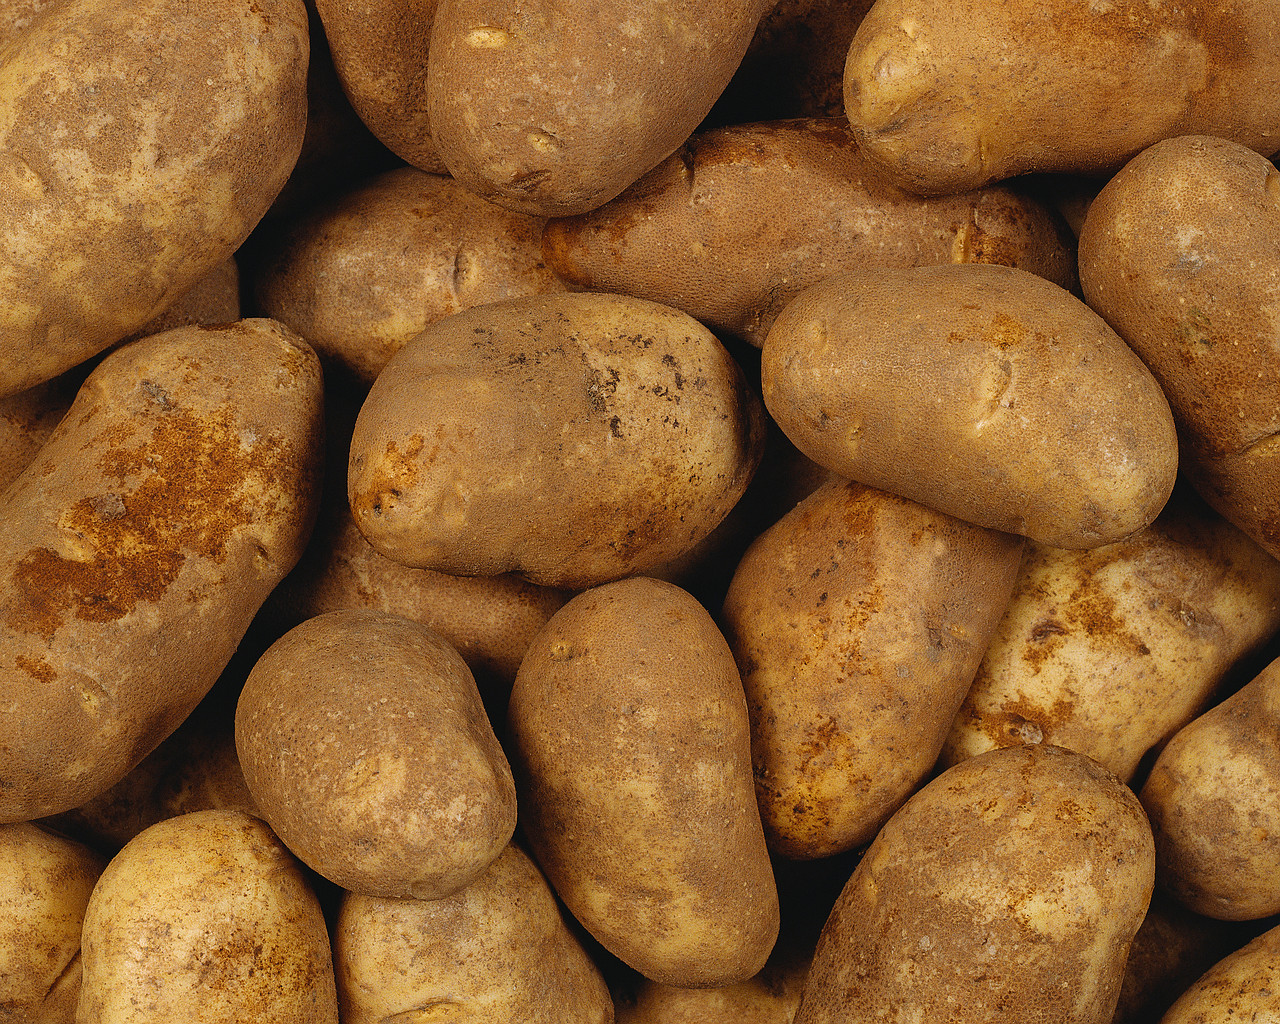 Popular Potato Image for Phone